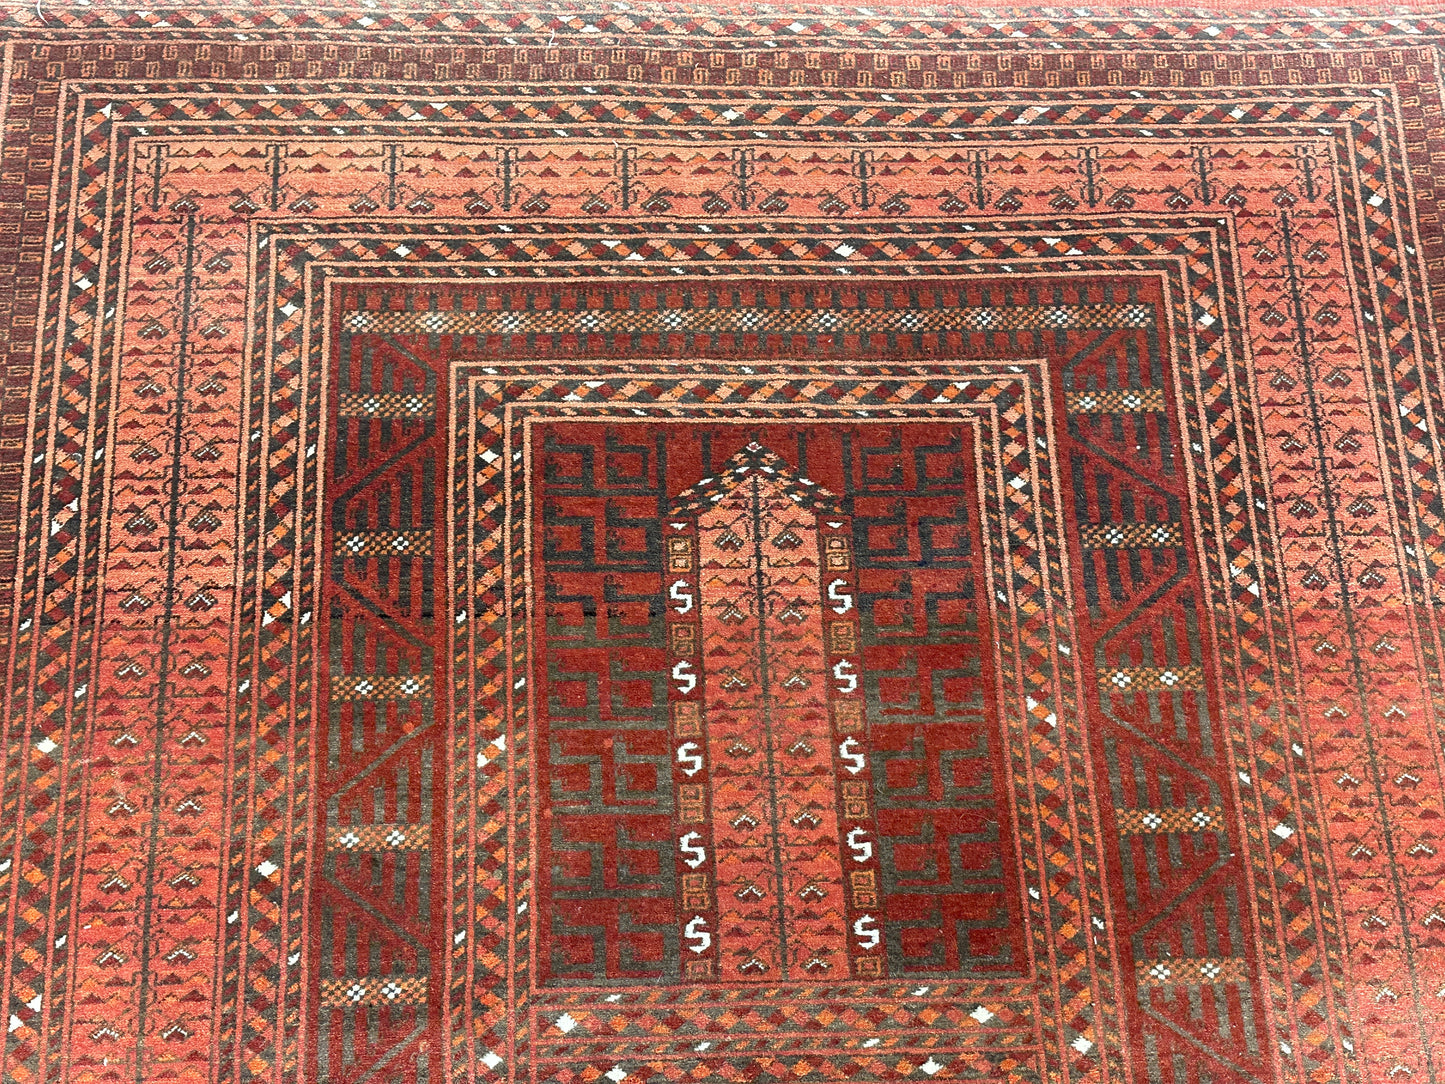 Antiker Handgeknüpfter Perser Orientteppich Jomut  190x130cm